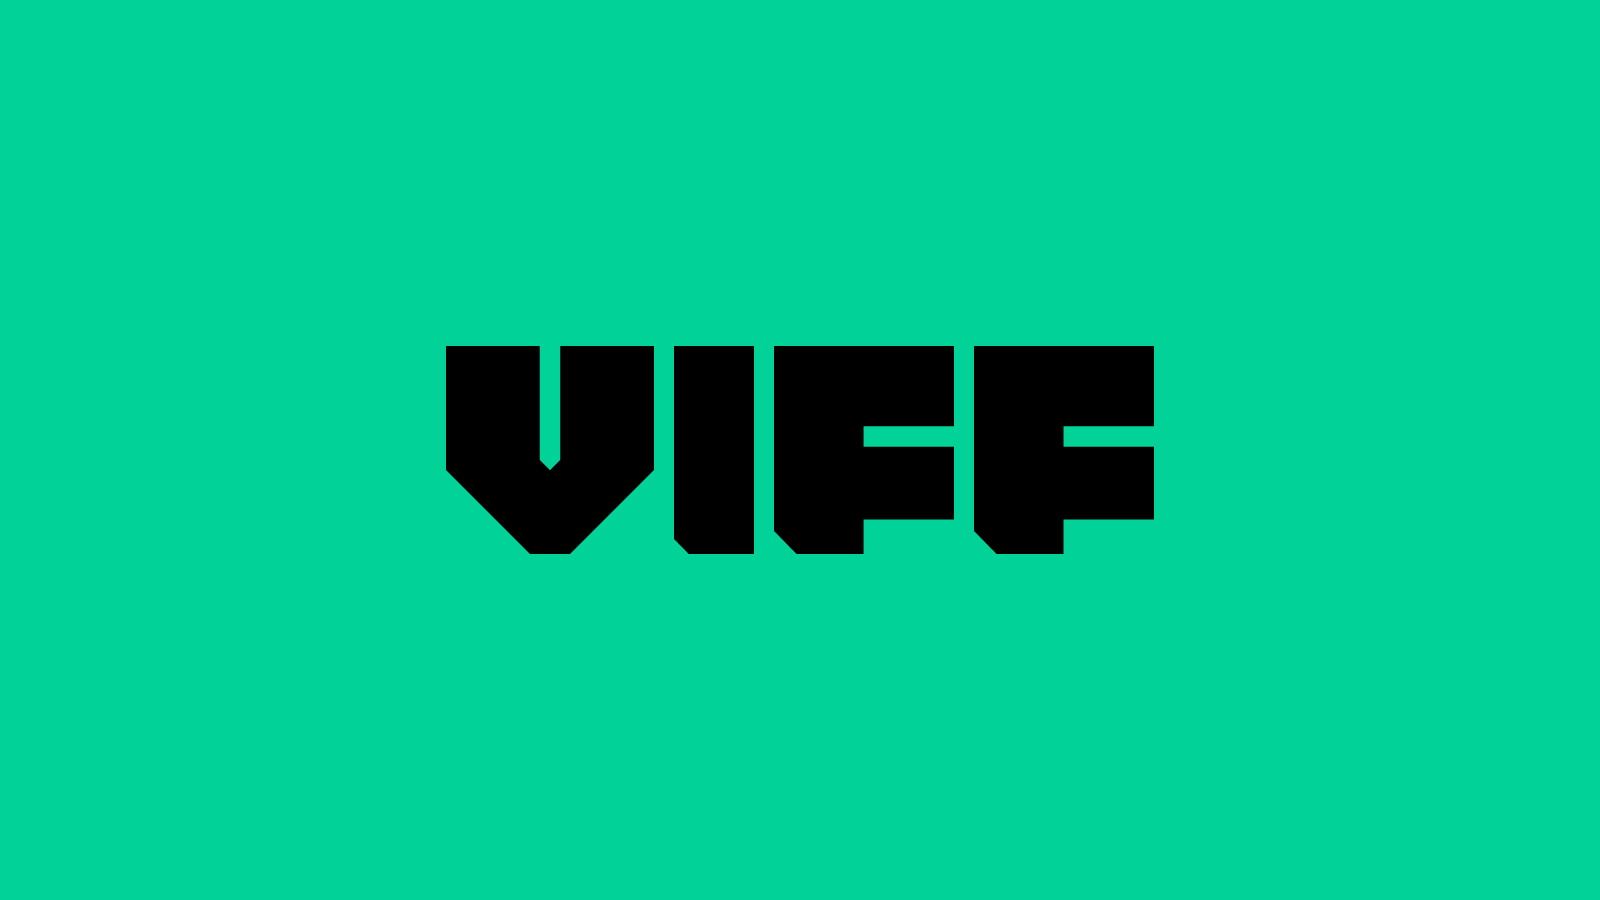 Vancouver International Film Festival logo on sea-green background